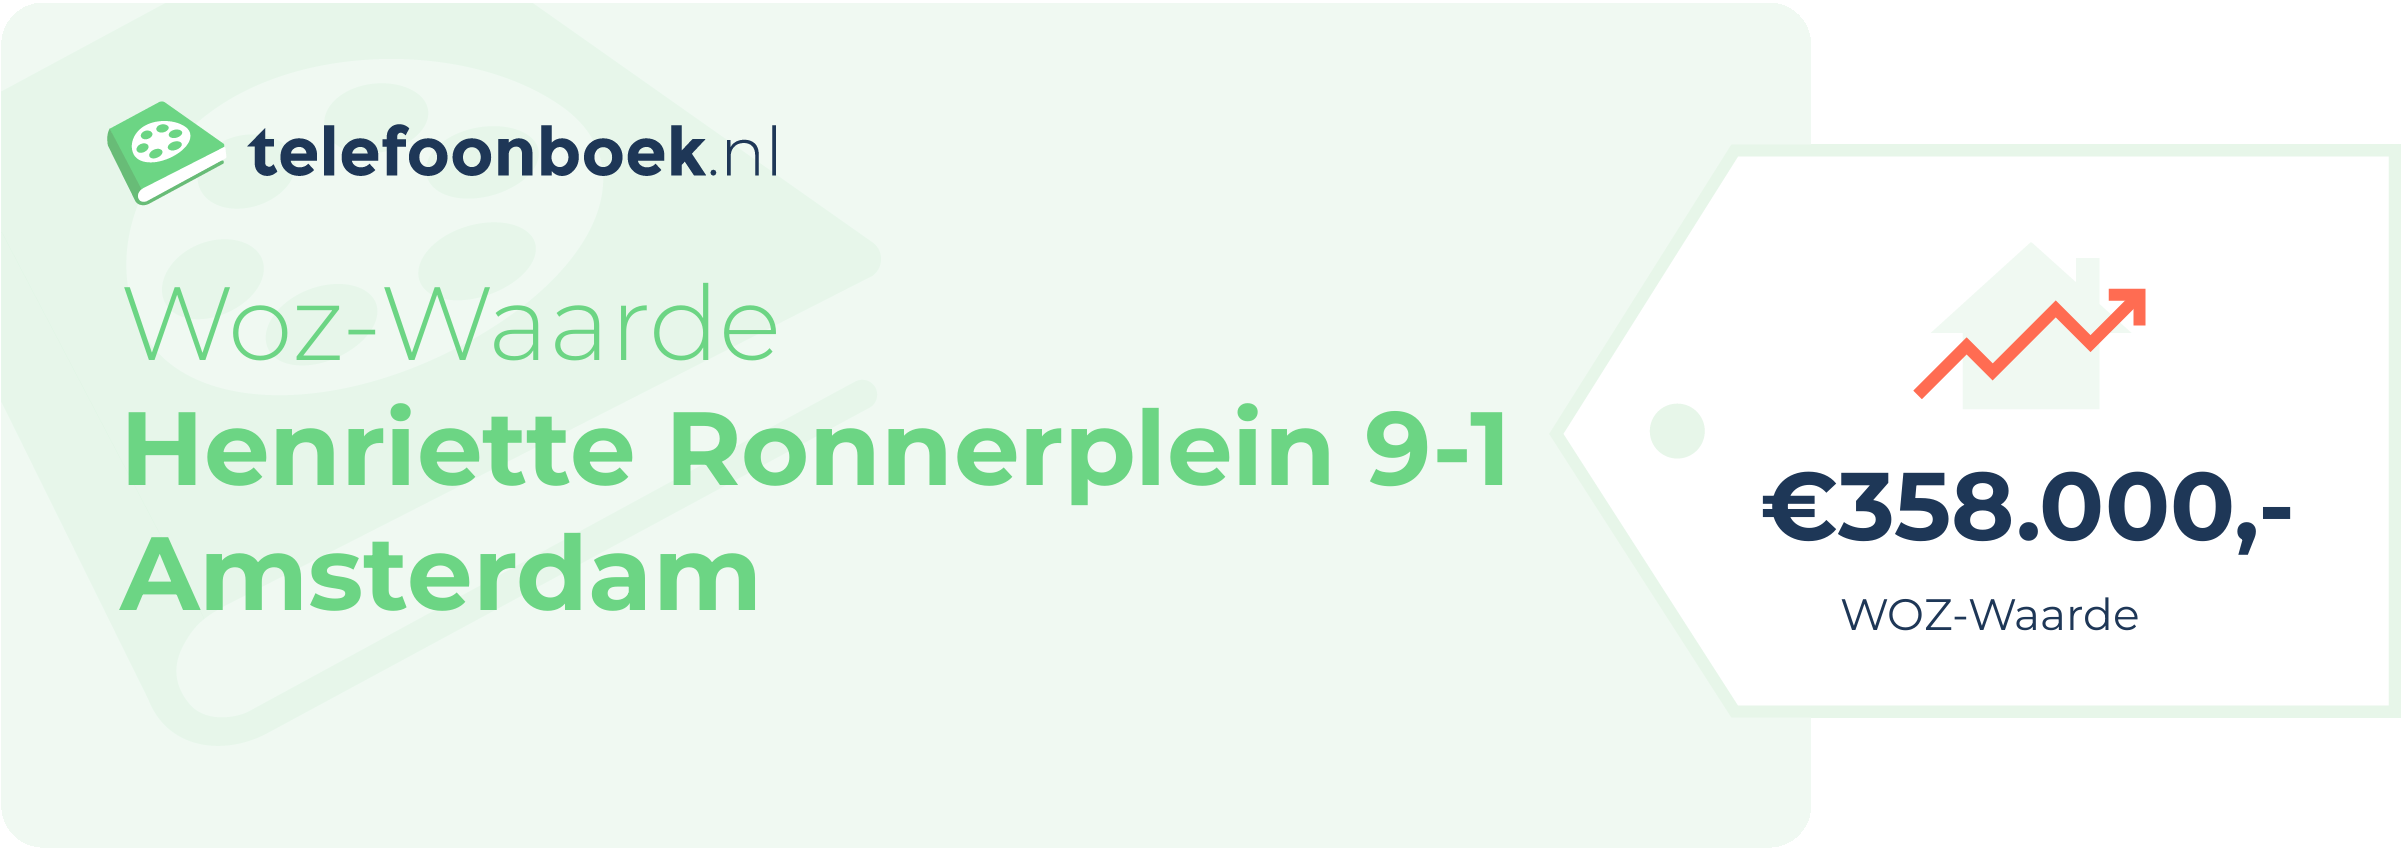 WOZ-waarde Henriette Ronnerplein 9-1 Amsterdam